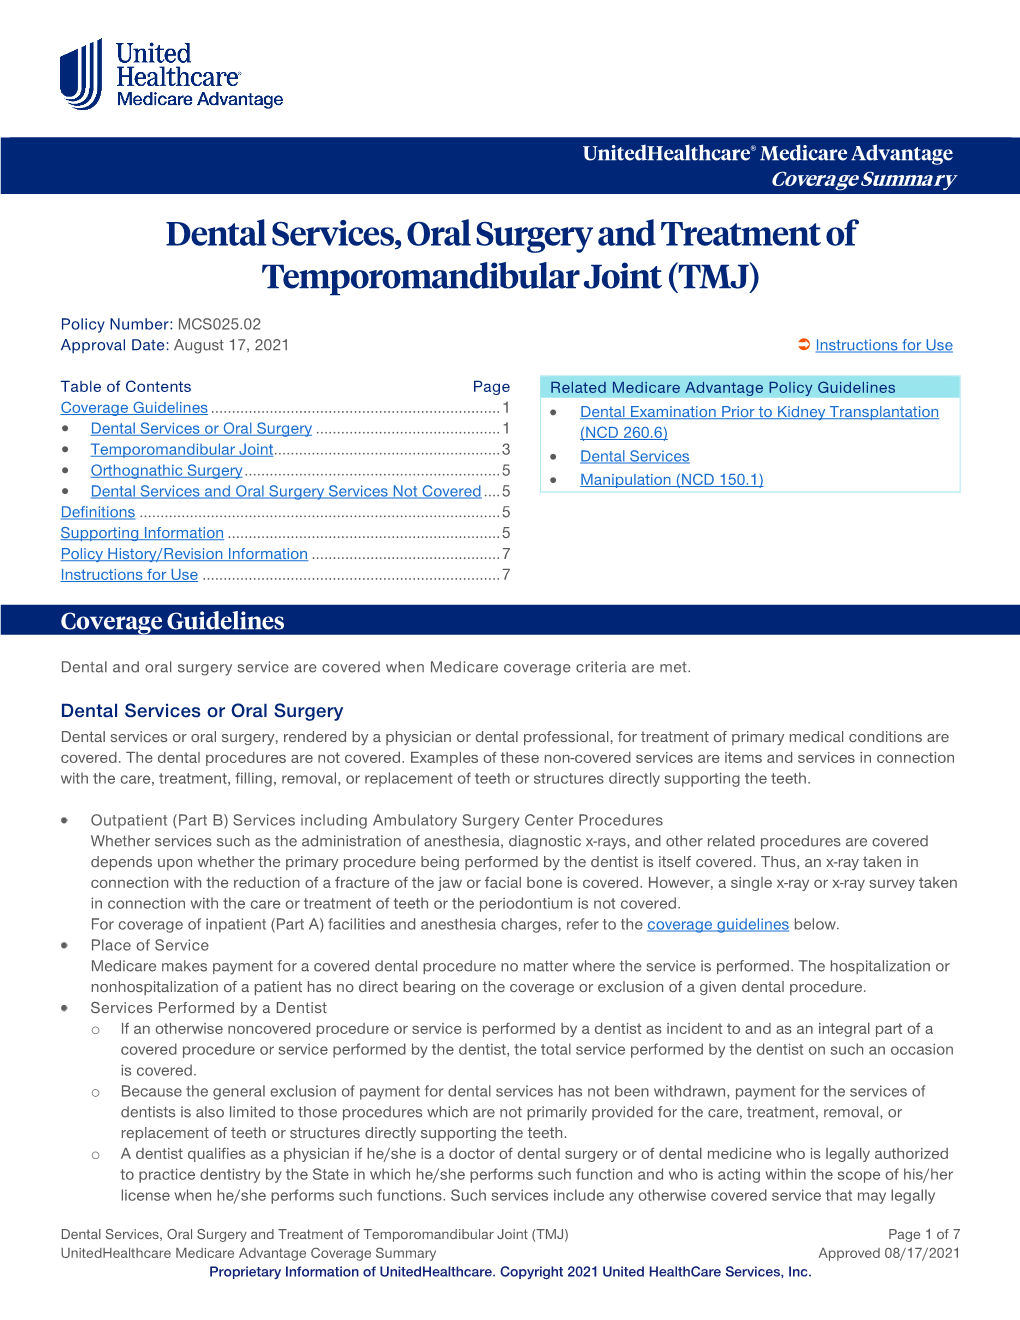 Dental Services, Oral Surgery and Treatment of Temporomandibular Joint (TMJ)